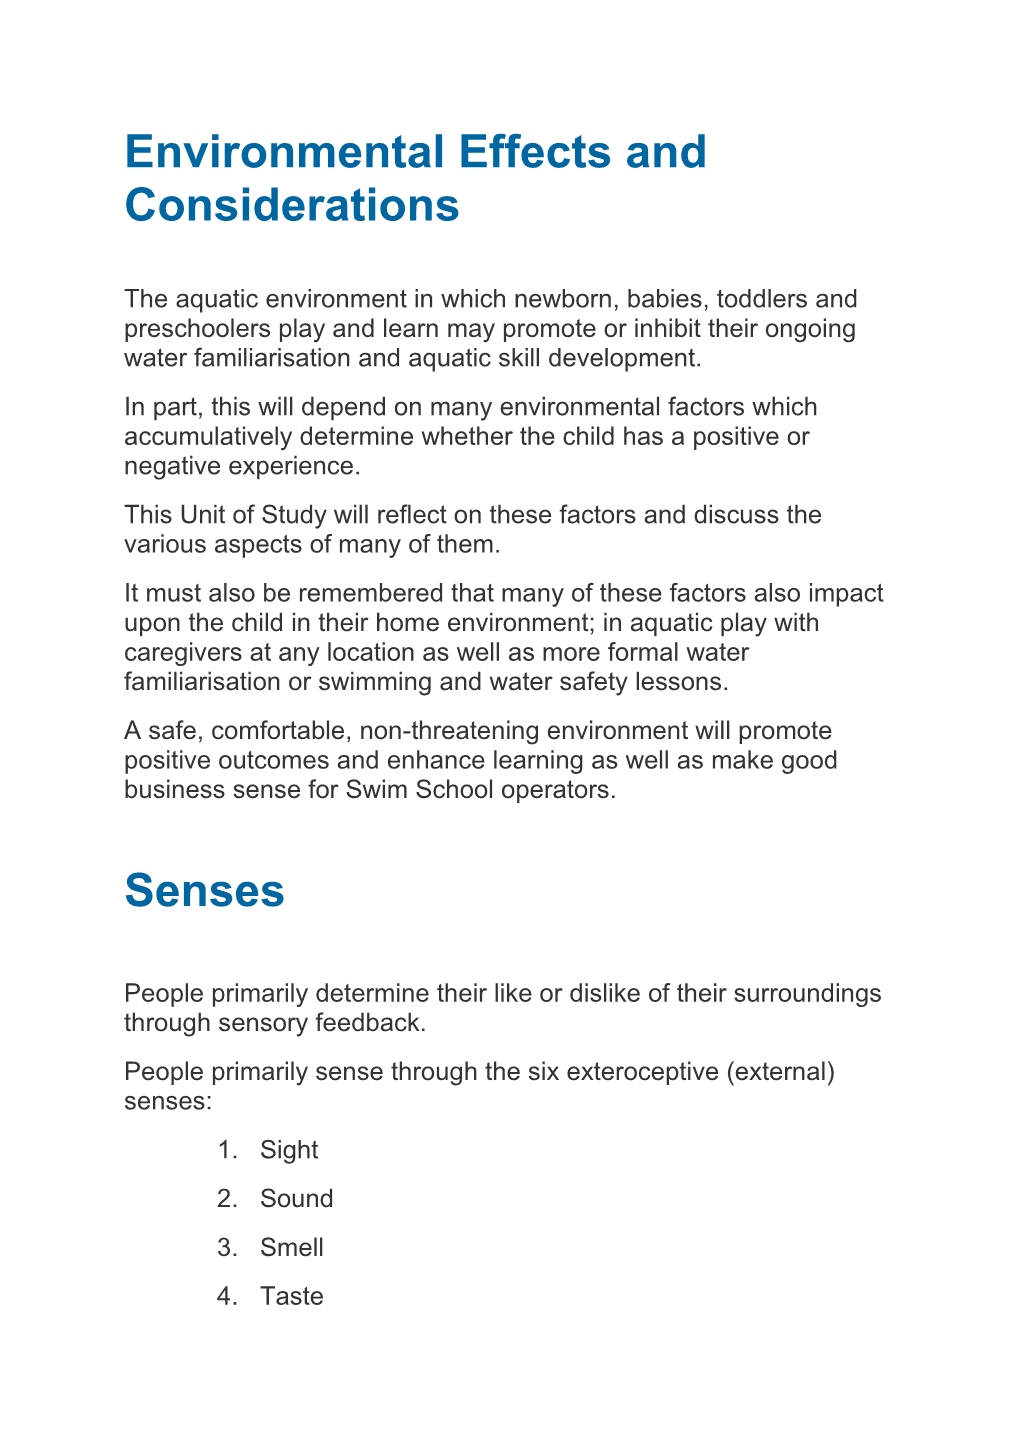 Environmental Effects and Considerations Senses